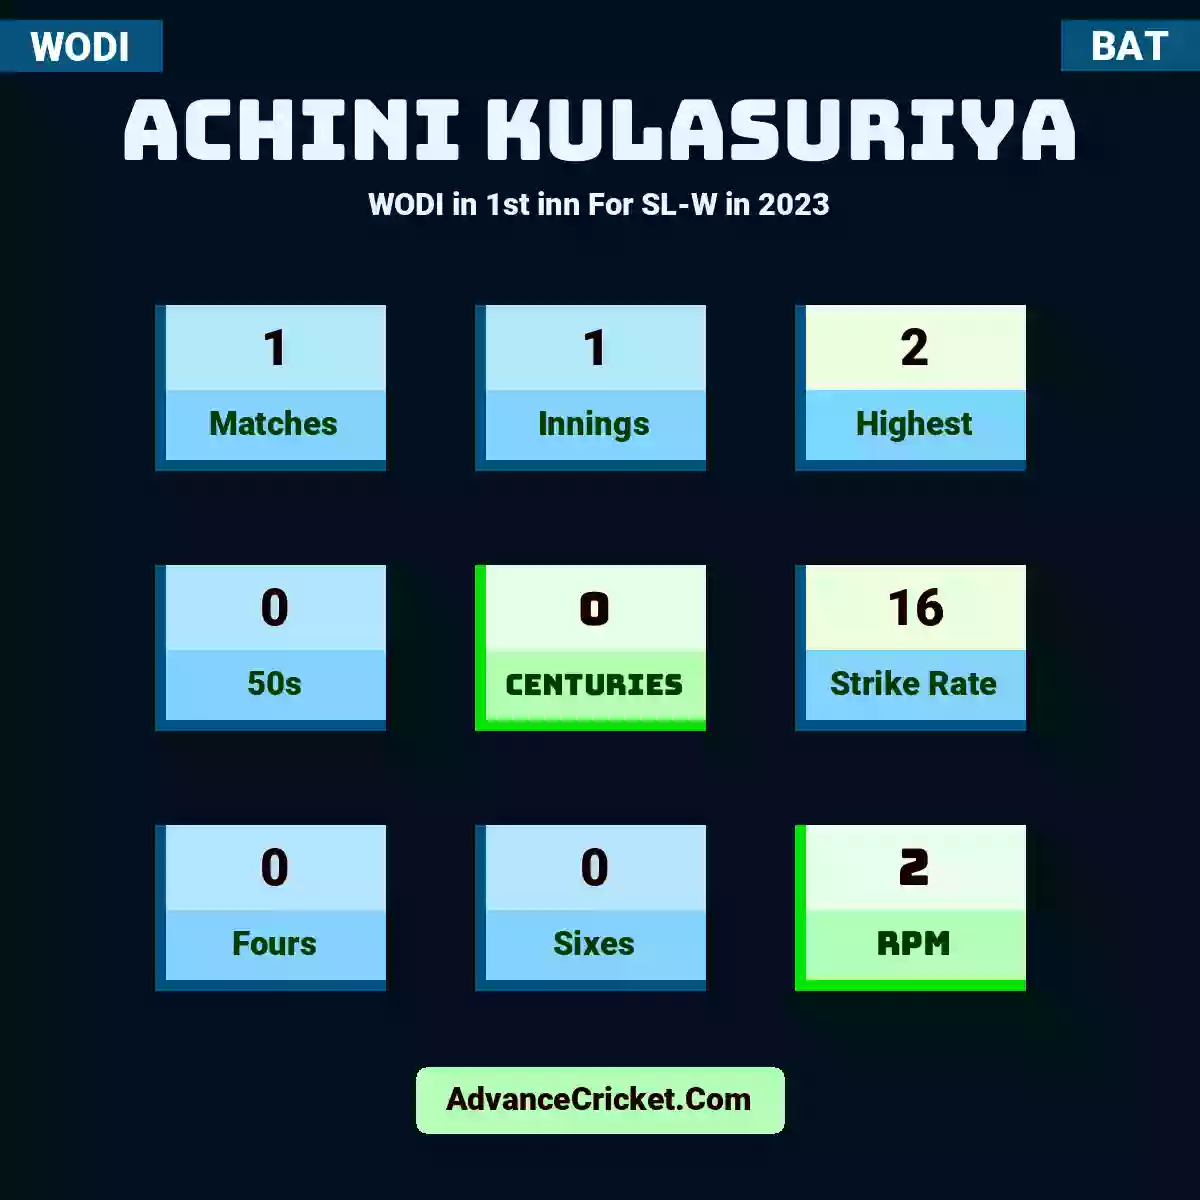 Achini Kulasuriya WODI  in 1st inn For SL-W in 2023, Achini Kulasuriya played 1 matches, scored 2 runs as highest, 0 half-centuries, and 0 centuries, with a strike rate of 16. A.Kulasuriya hit 0 fours and 0 sixes, with an RPM of 2.